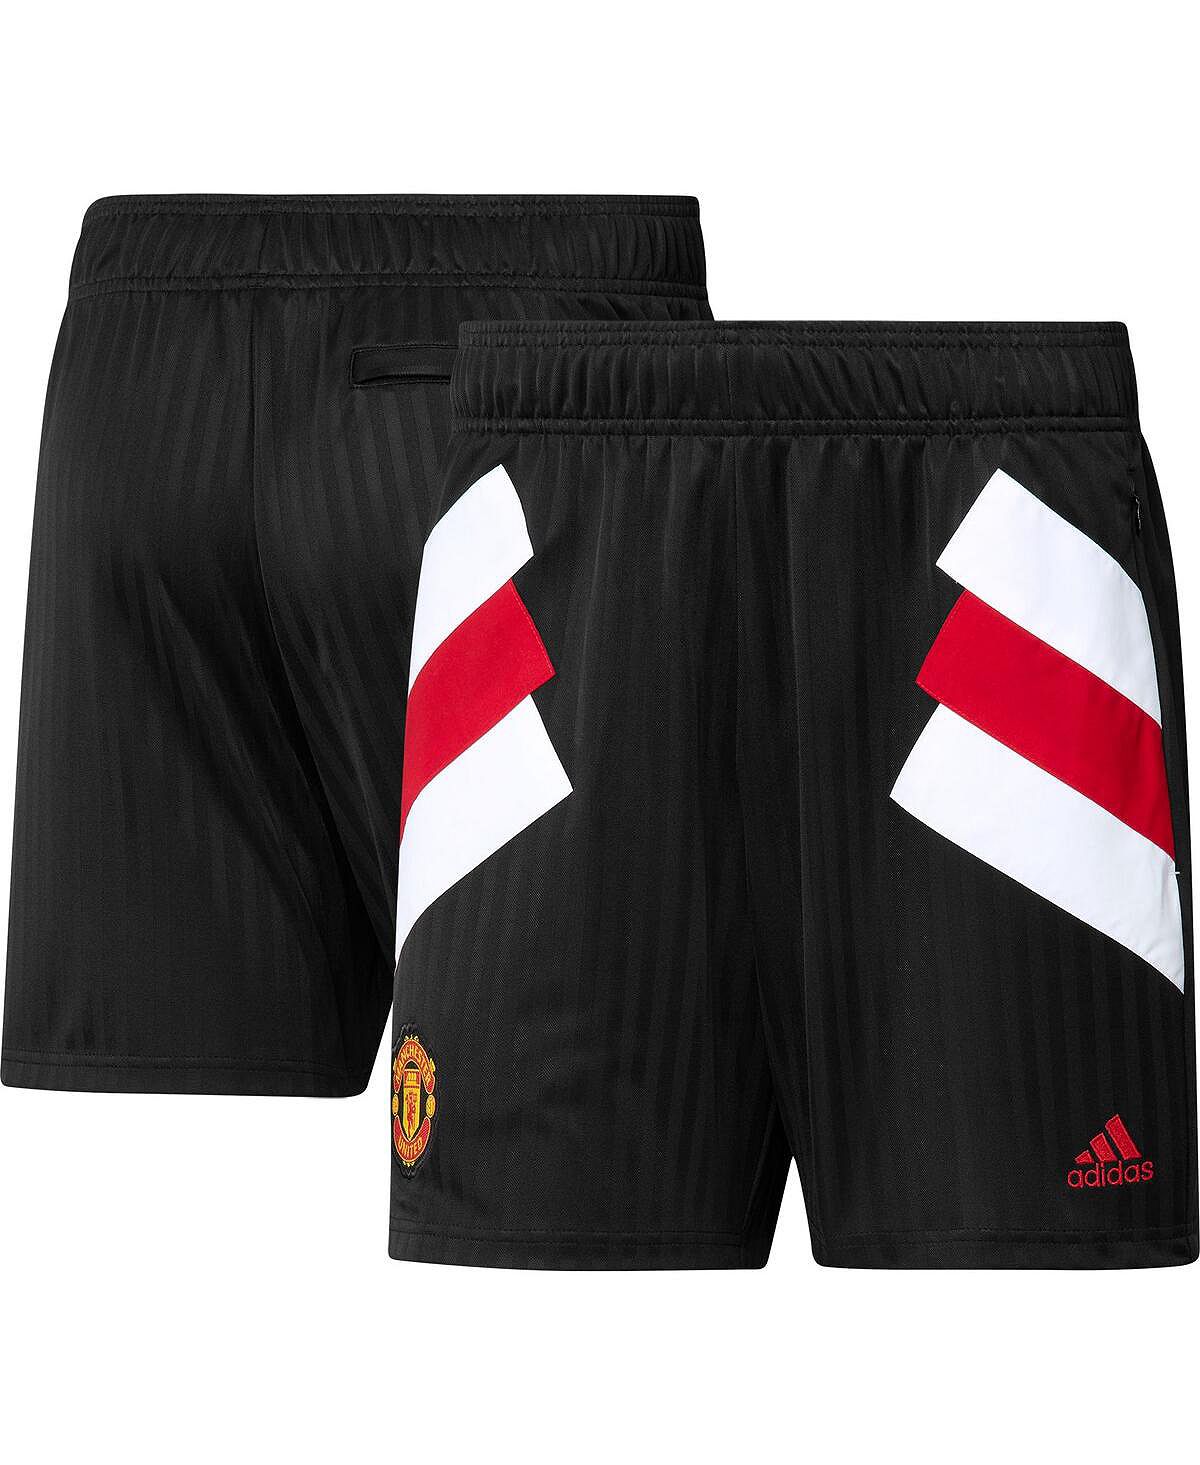 Мужские черные шорты Manchester United Football Icon adidas 2021 2022 new manchester football jersey top quality fast send united